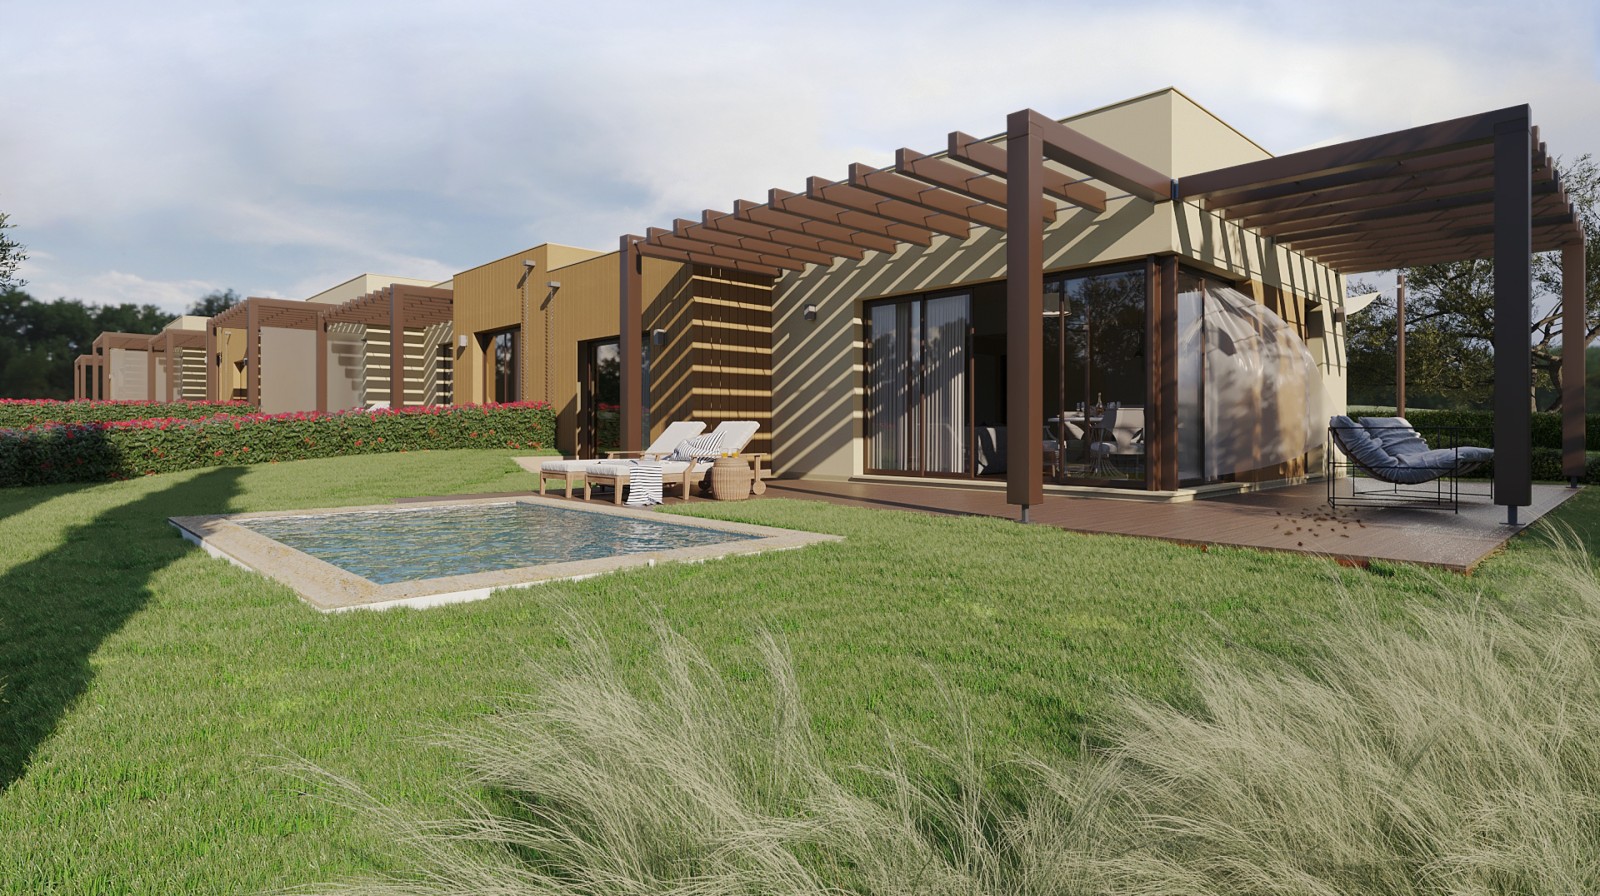 2 bedroom semi-detached villa with swimming pool for sale in Golf resort, Algarve_218834